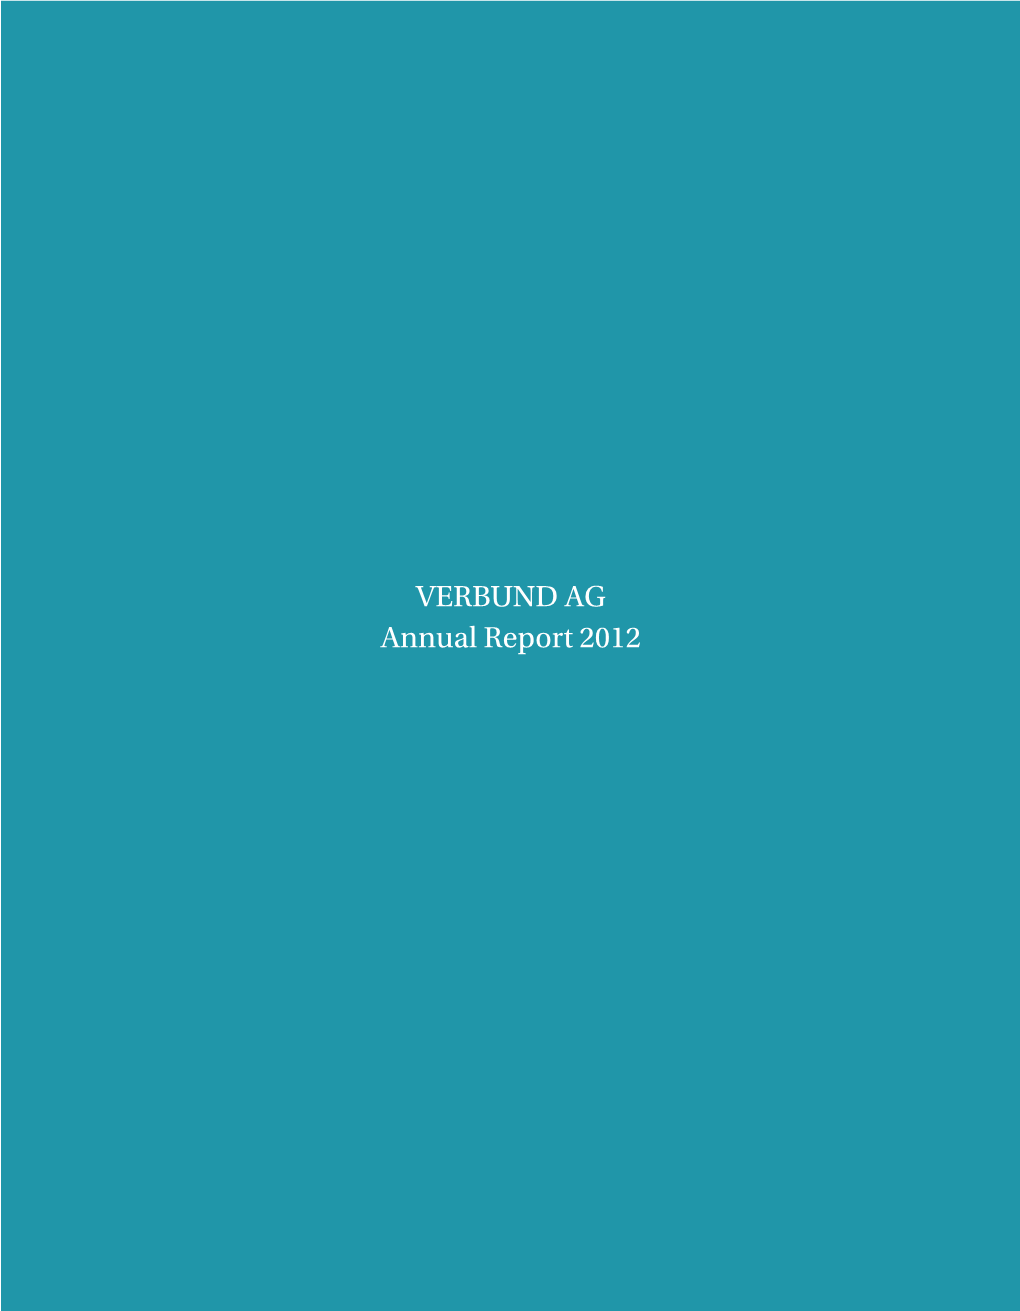 VERBUND AG Annual Report 2012